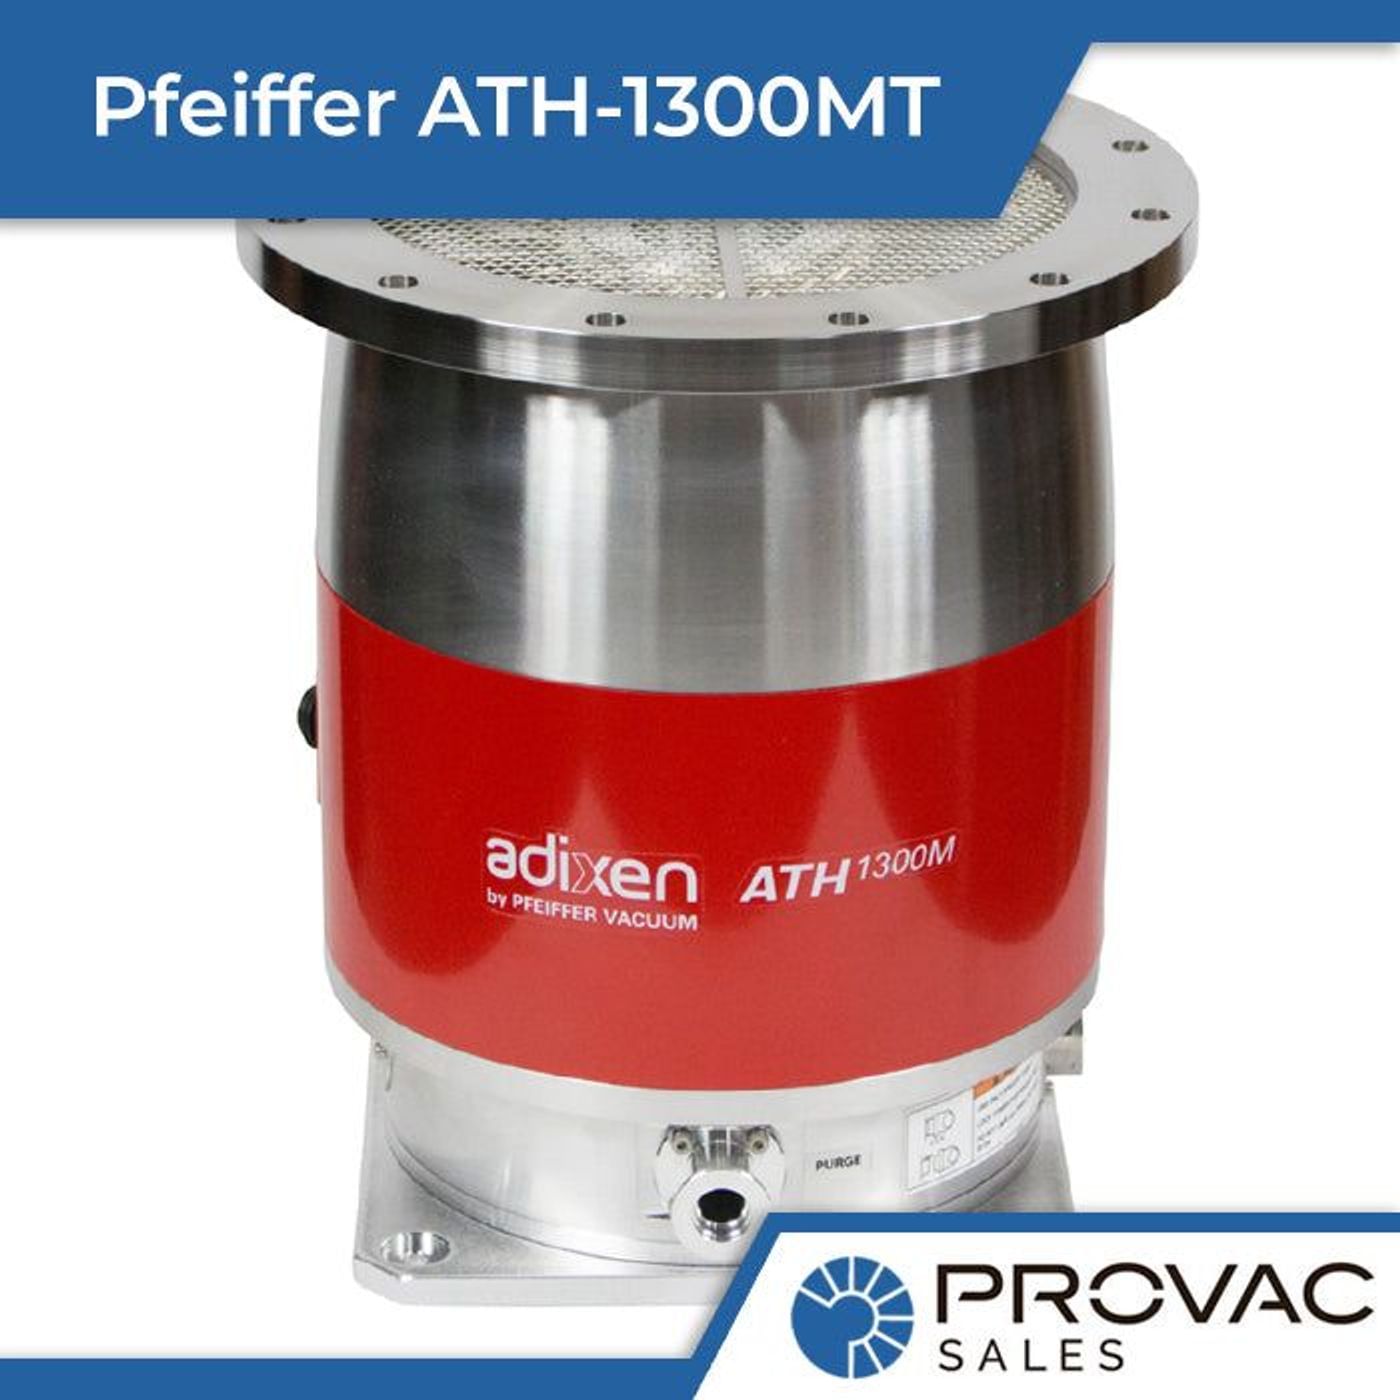 Product Spotlight: Pfeiffer ATH-1300MT Turbo Pump